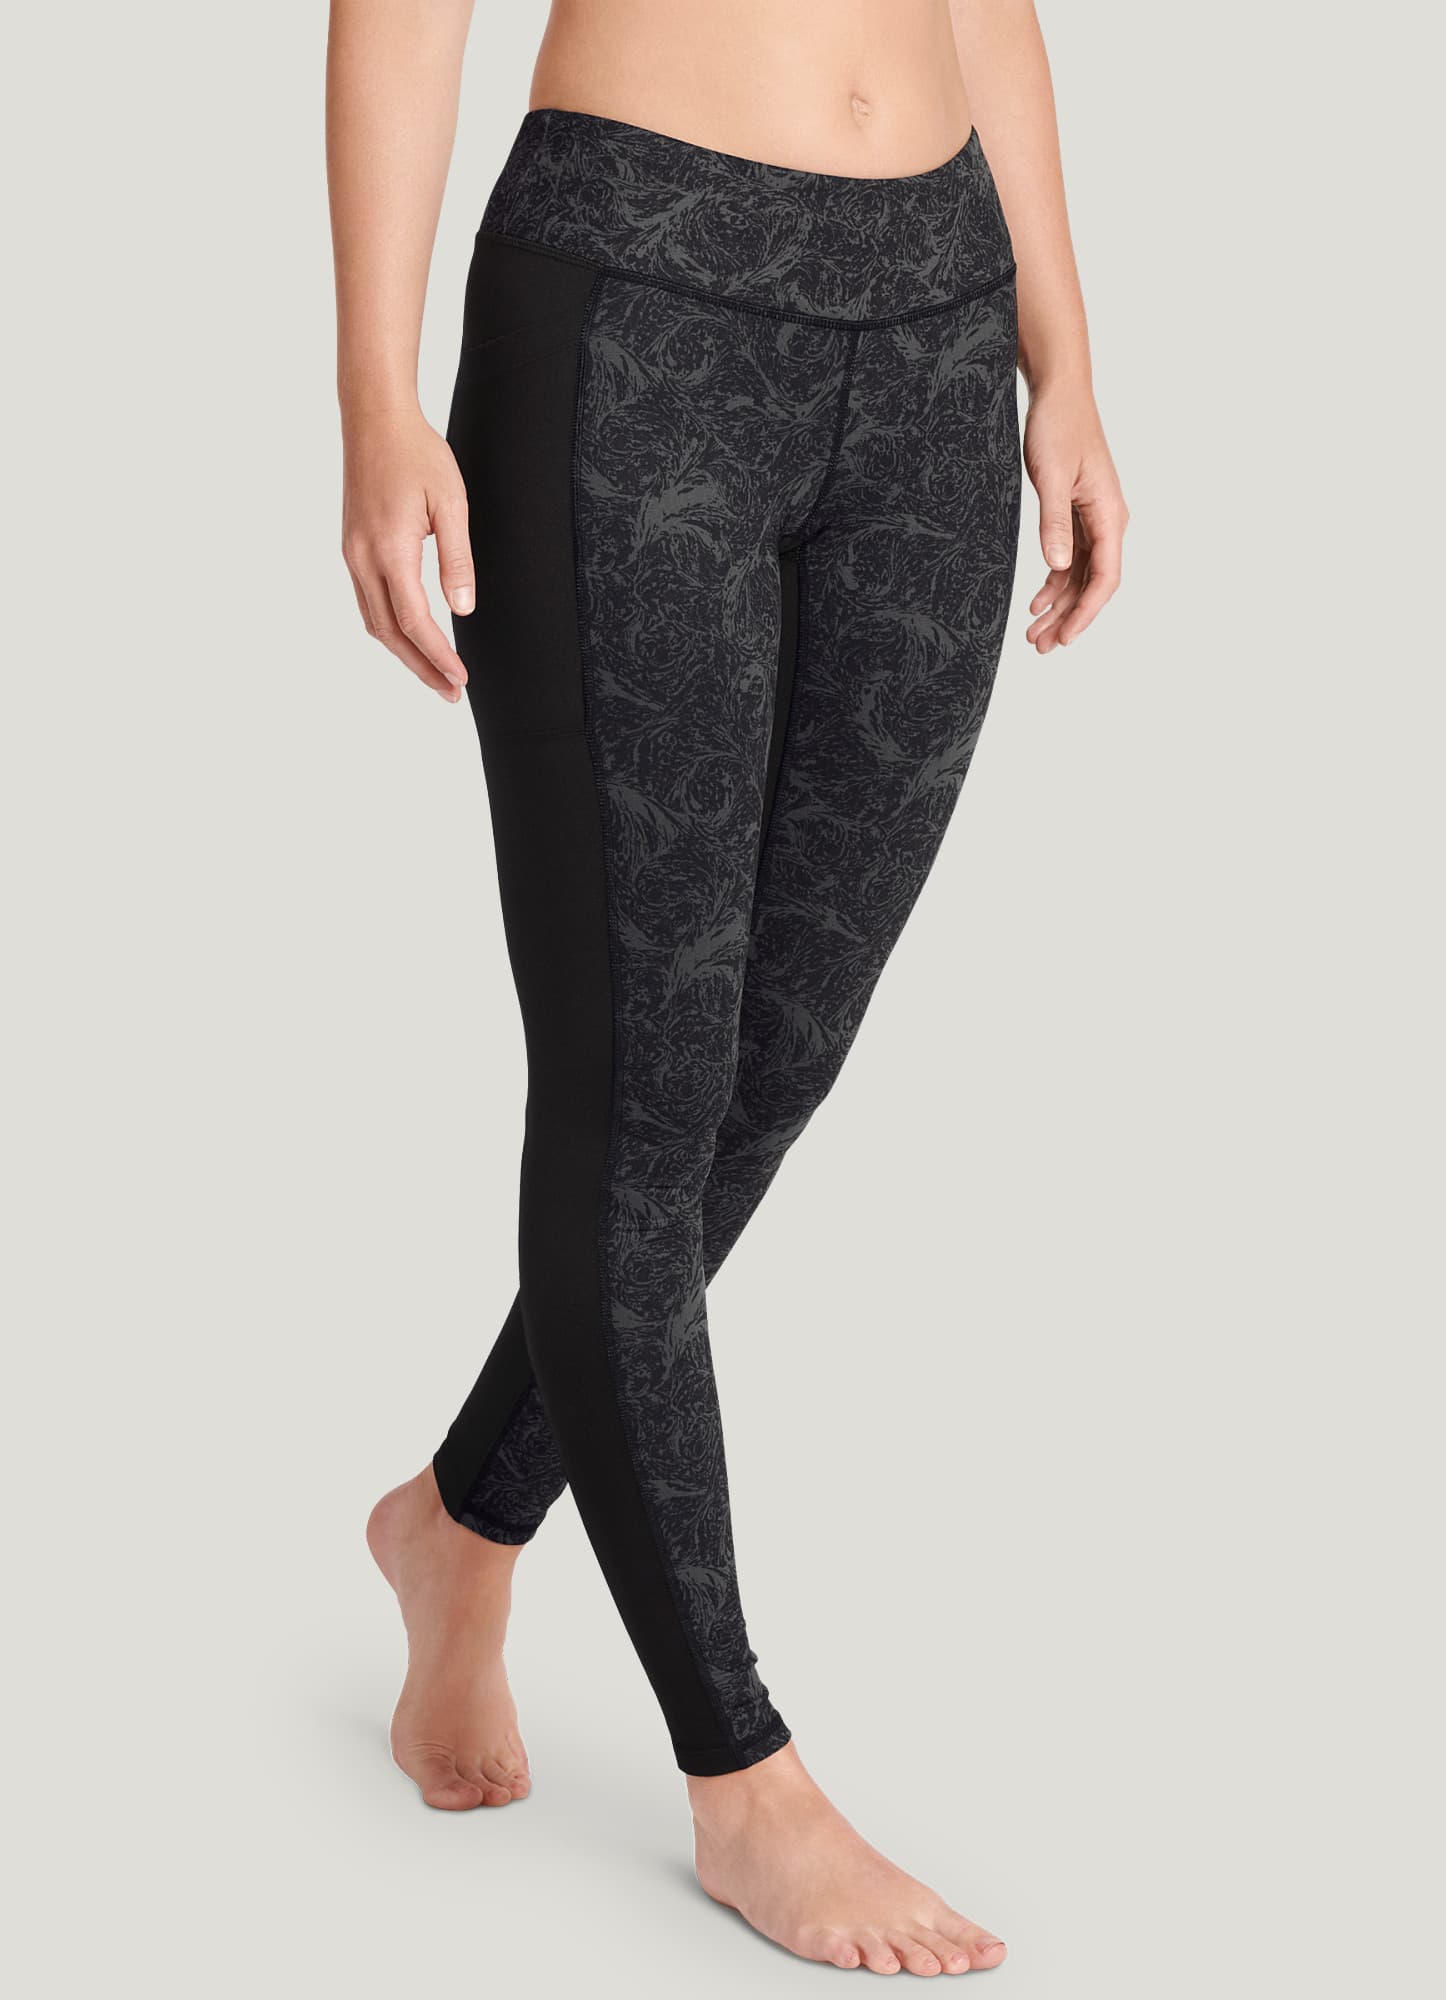 Women's Jockey Premium Pocket Yoga Pants Color: GRAPHITE GRAY Size: SMALL